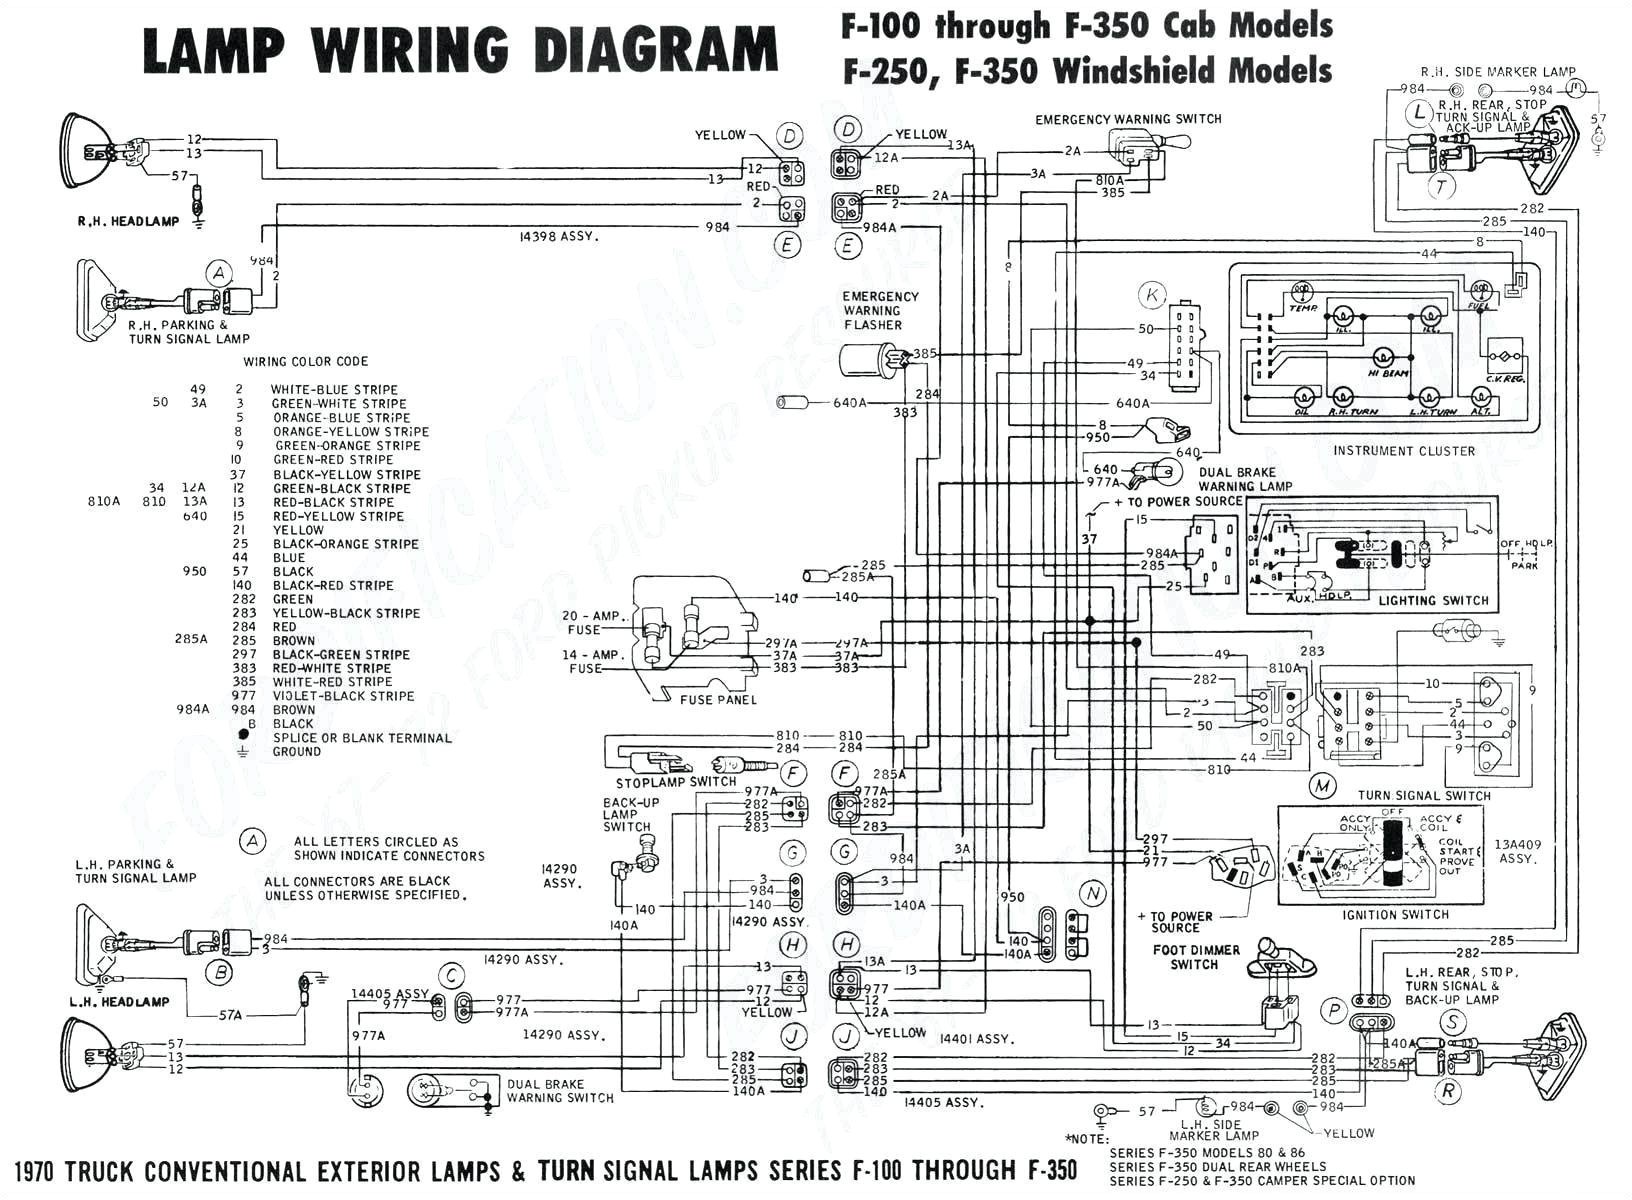 2007 international 4300 wiring diagram new international truck wiring diagram besides international truck fuse of 2007 international 4300 wiring diagram jpg